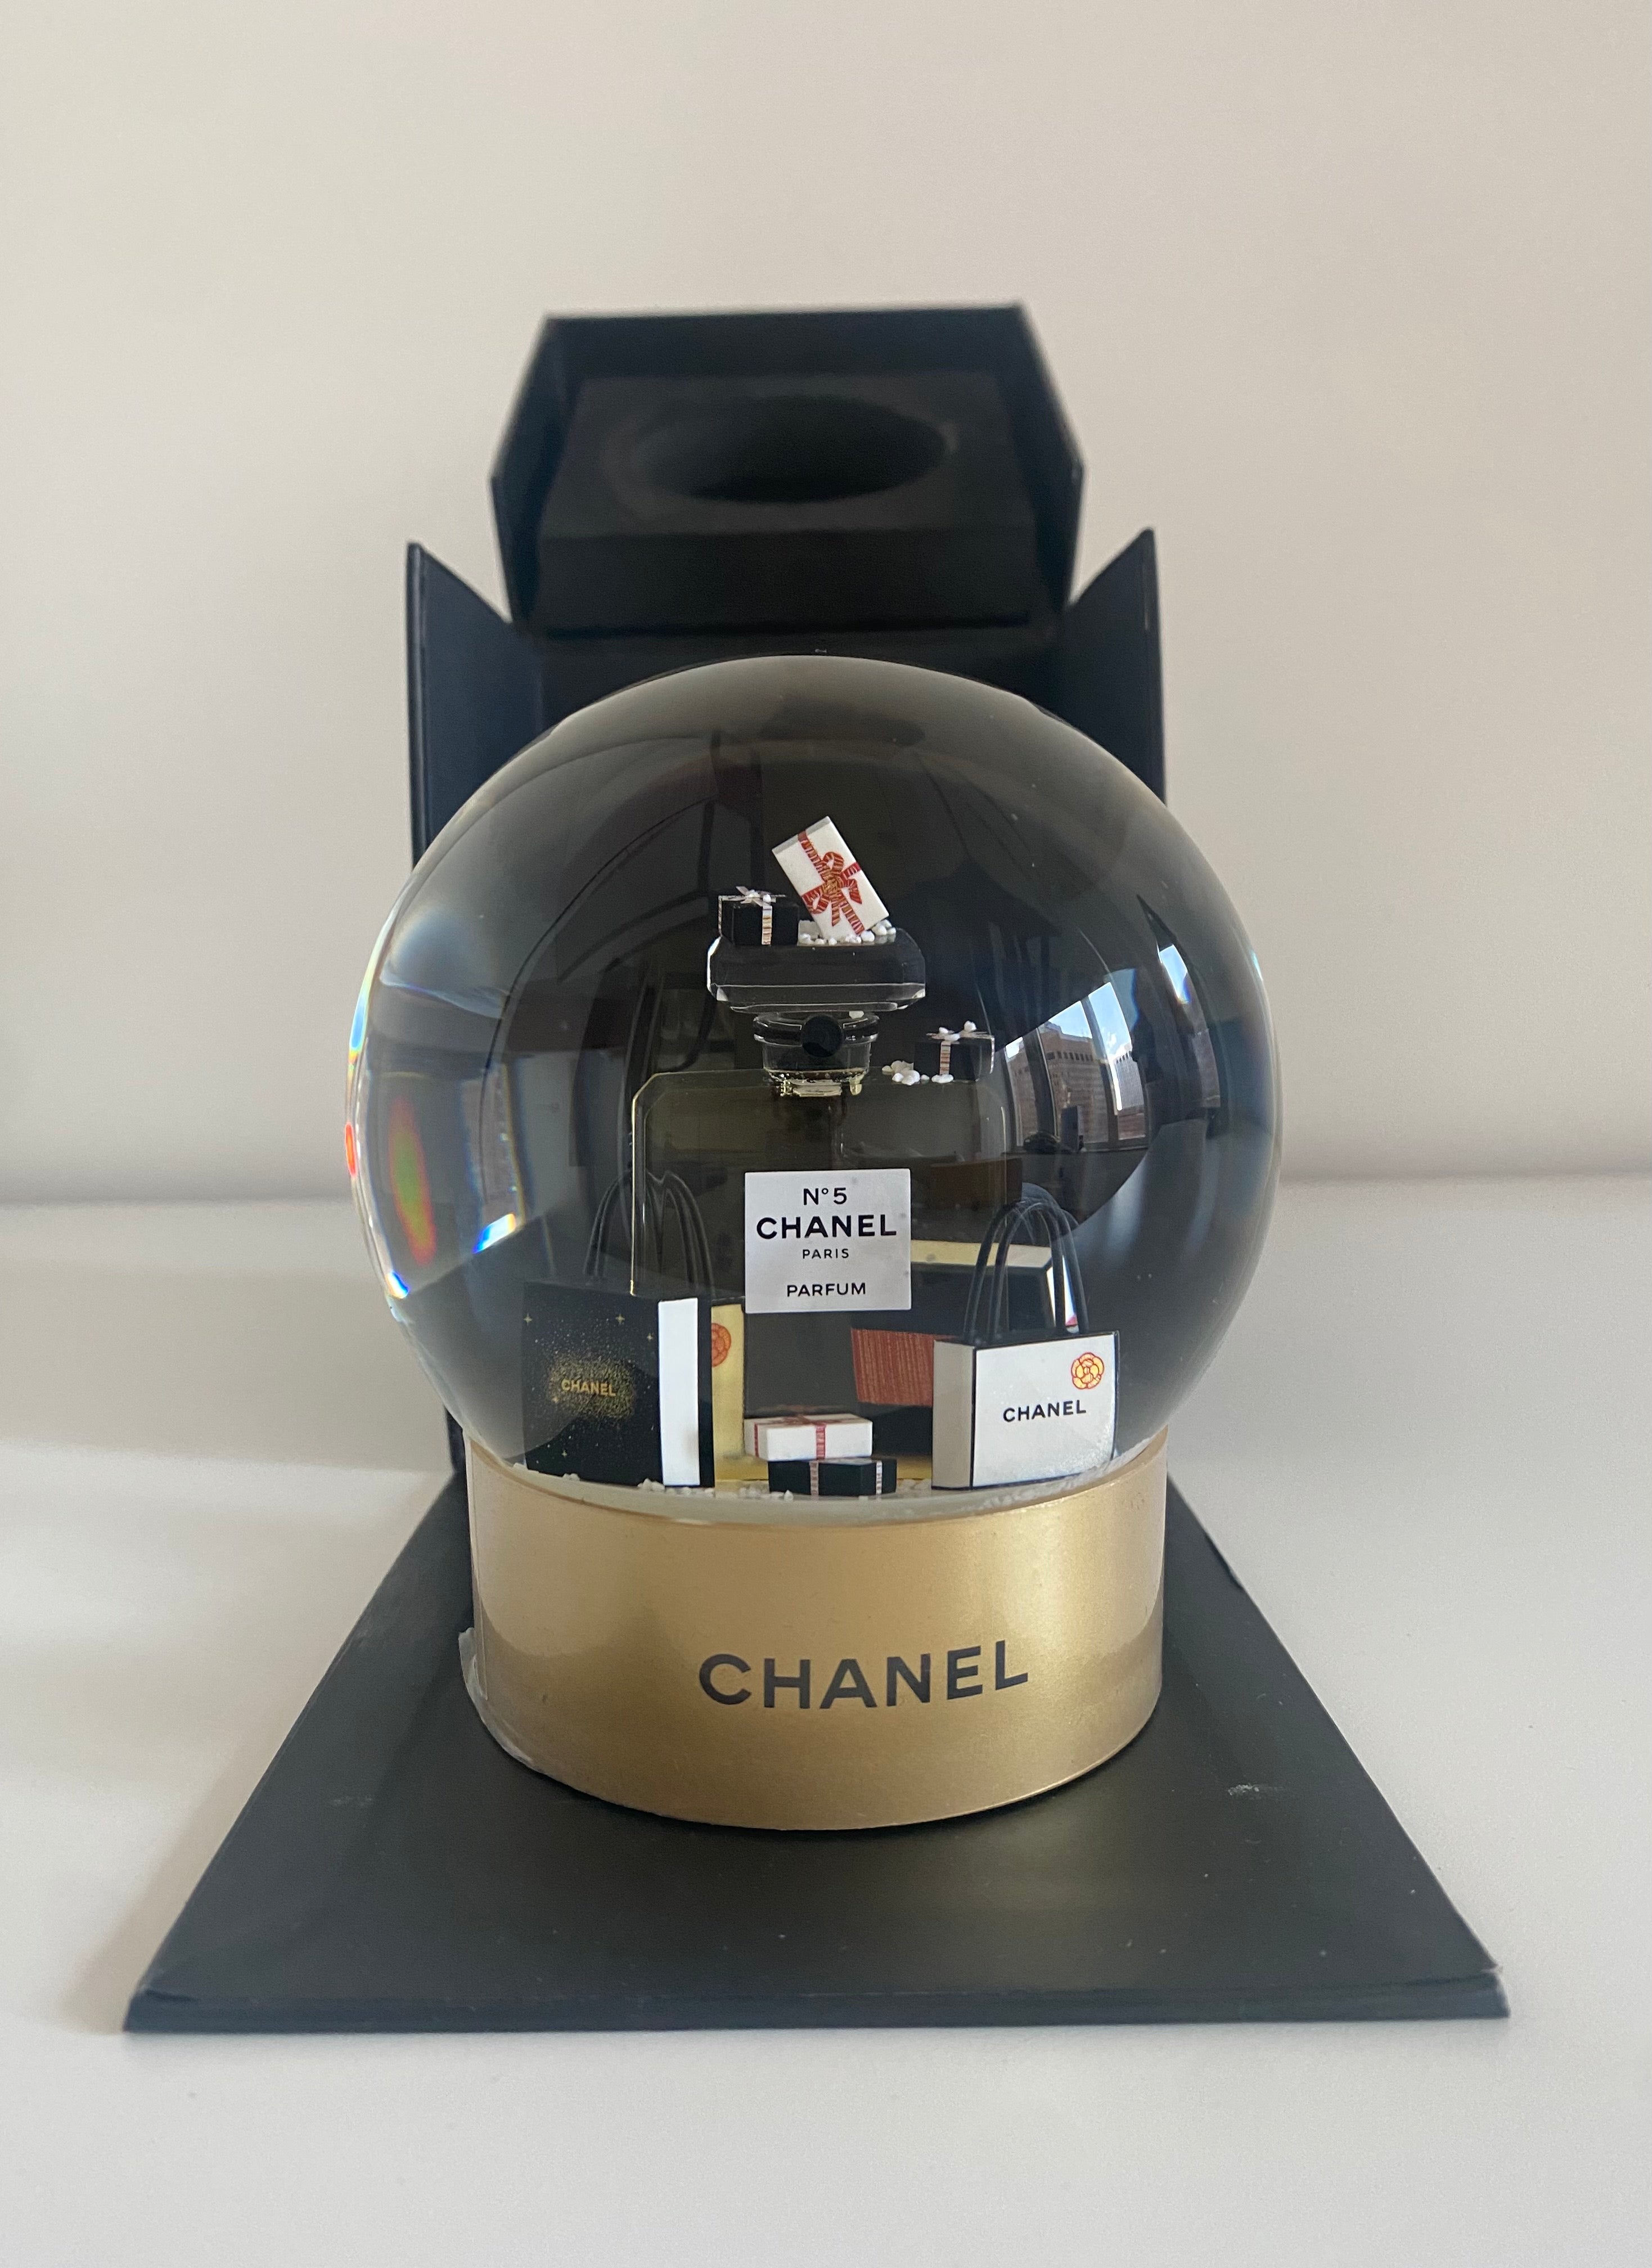 Chanel Display Bottle - 27 For Sale on 1stDibs